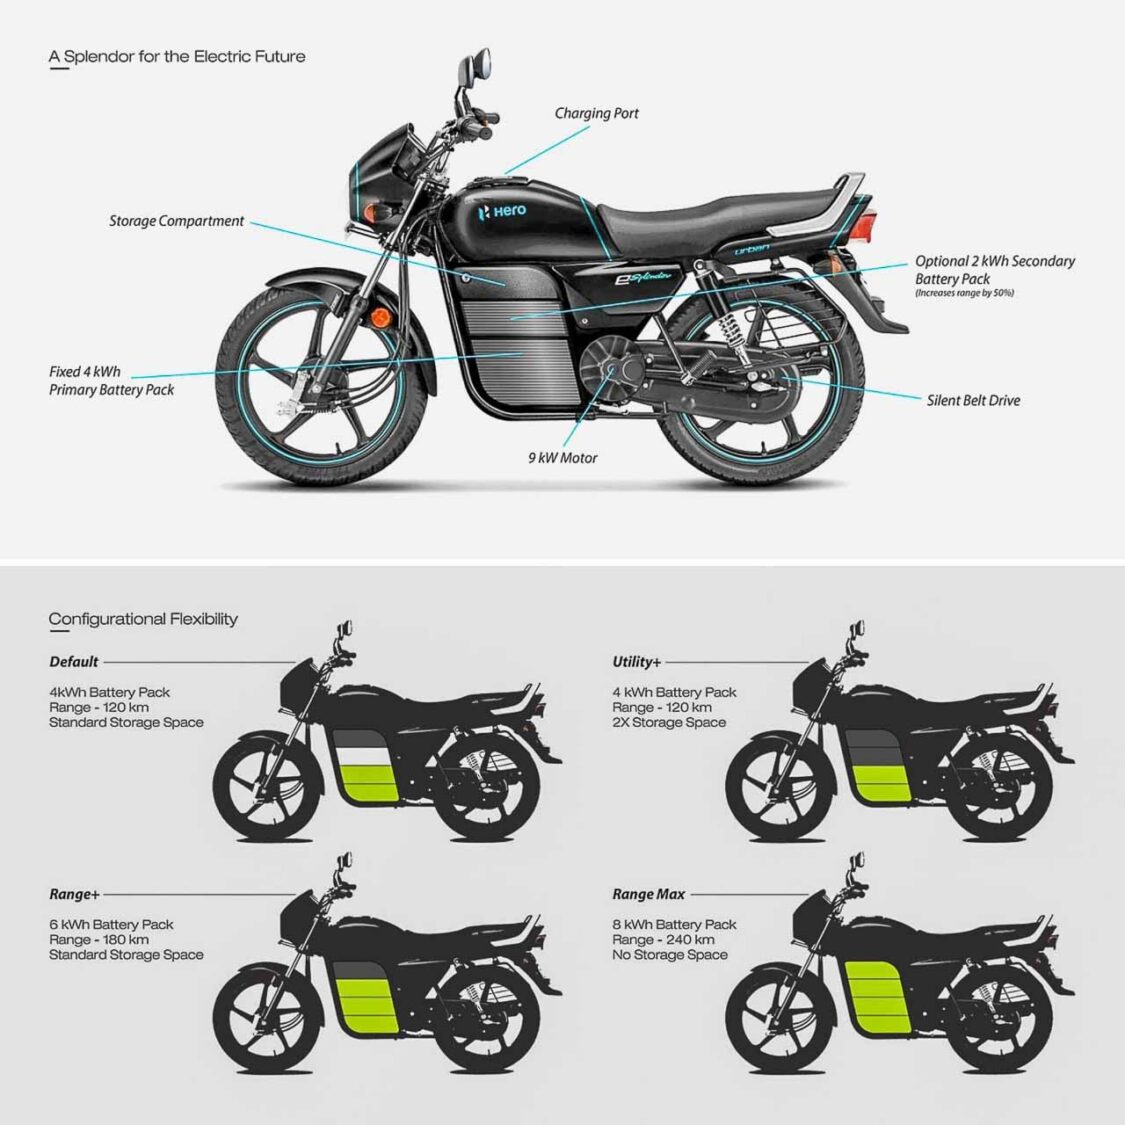 Hero Splendor Electric Motorcycle Imagined - Up To 240 Kms Range